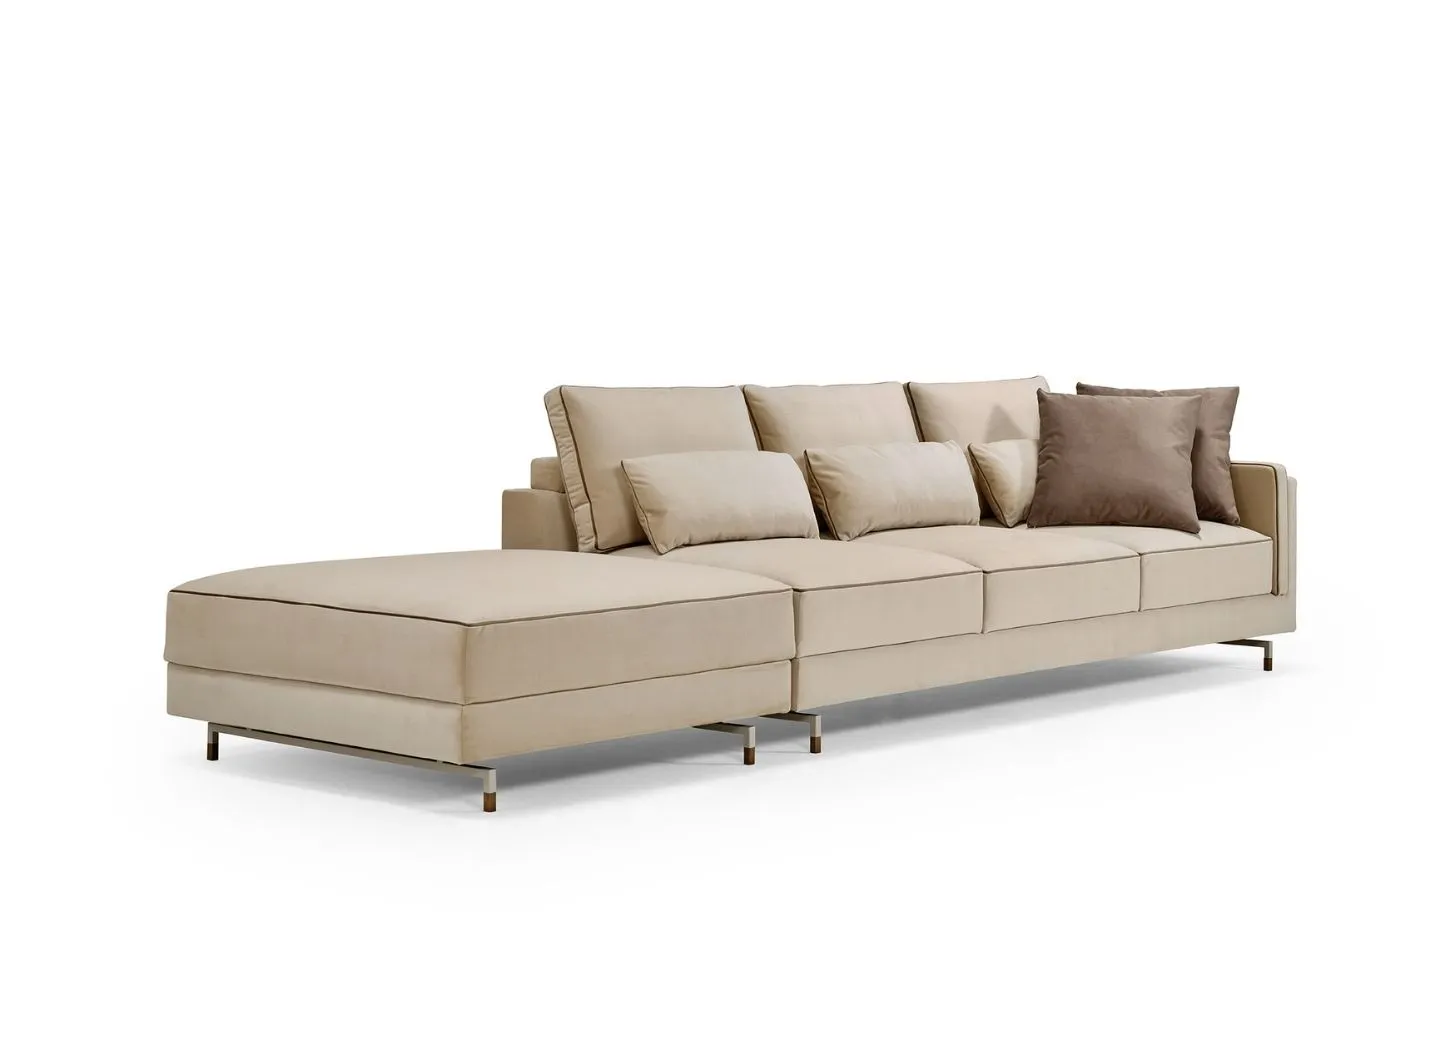 SINATRA Modular Sofa